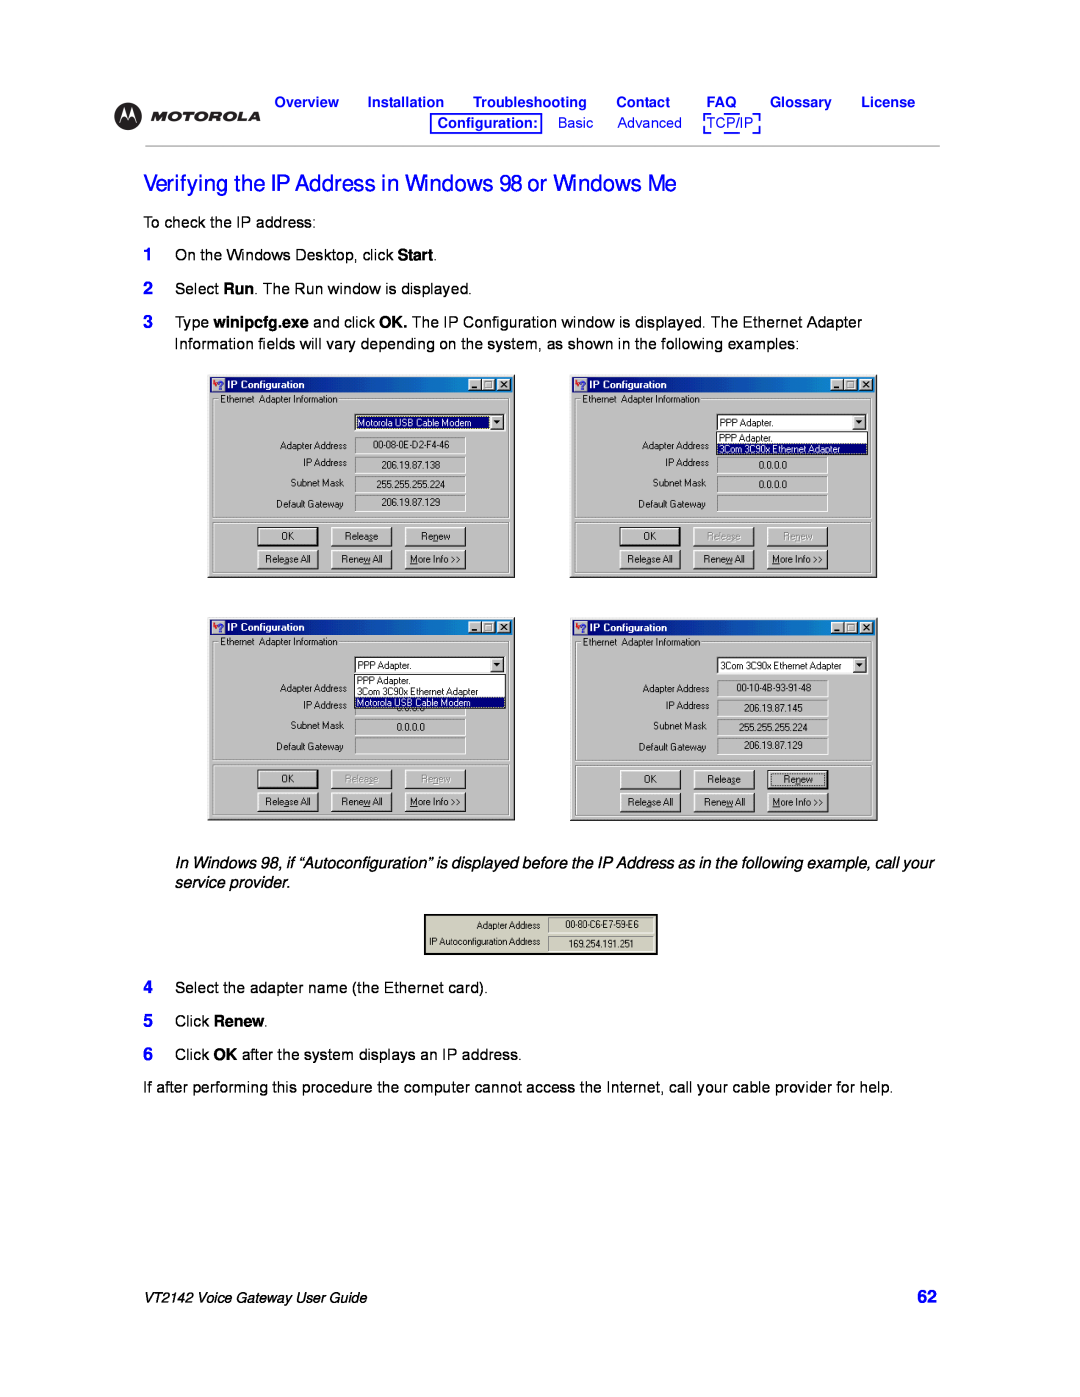 Motorola VT2142 manual Verifying the IP Address in Windows 98 or Windows Me 